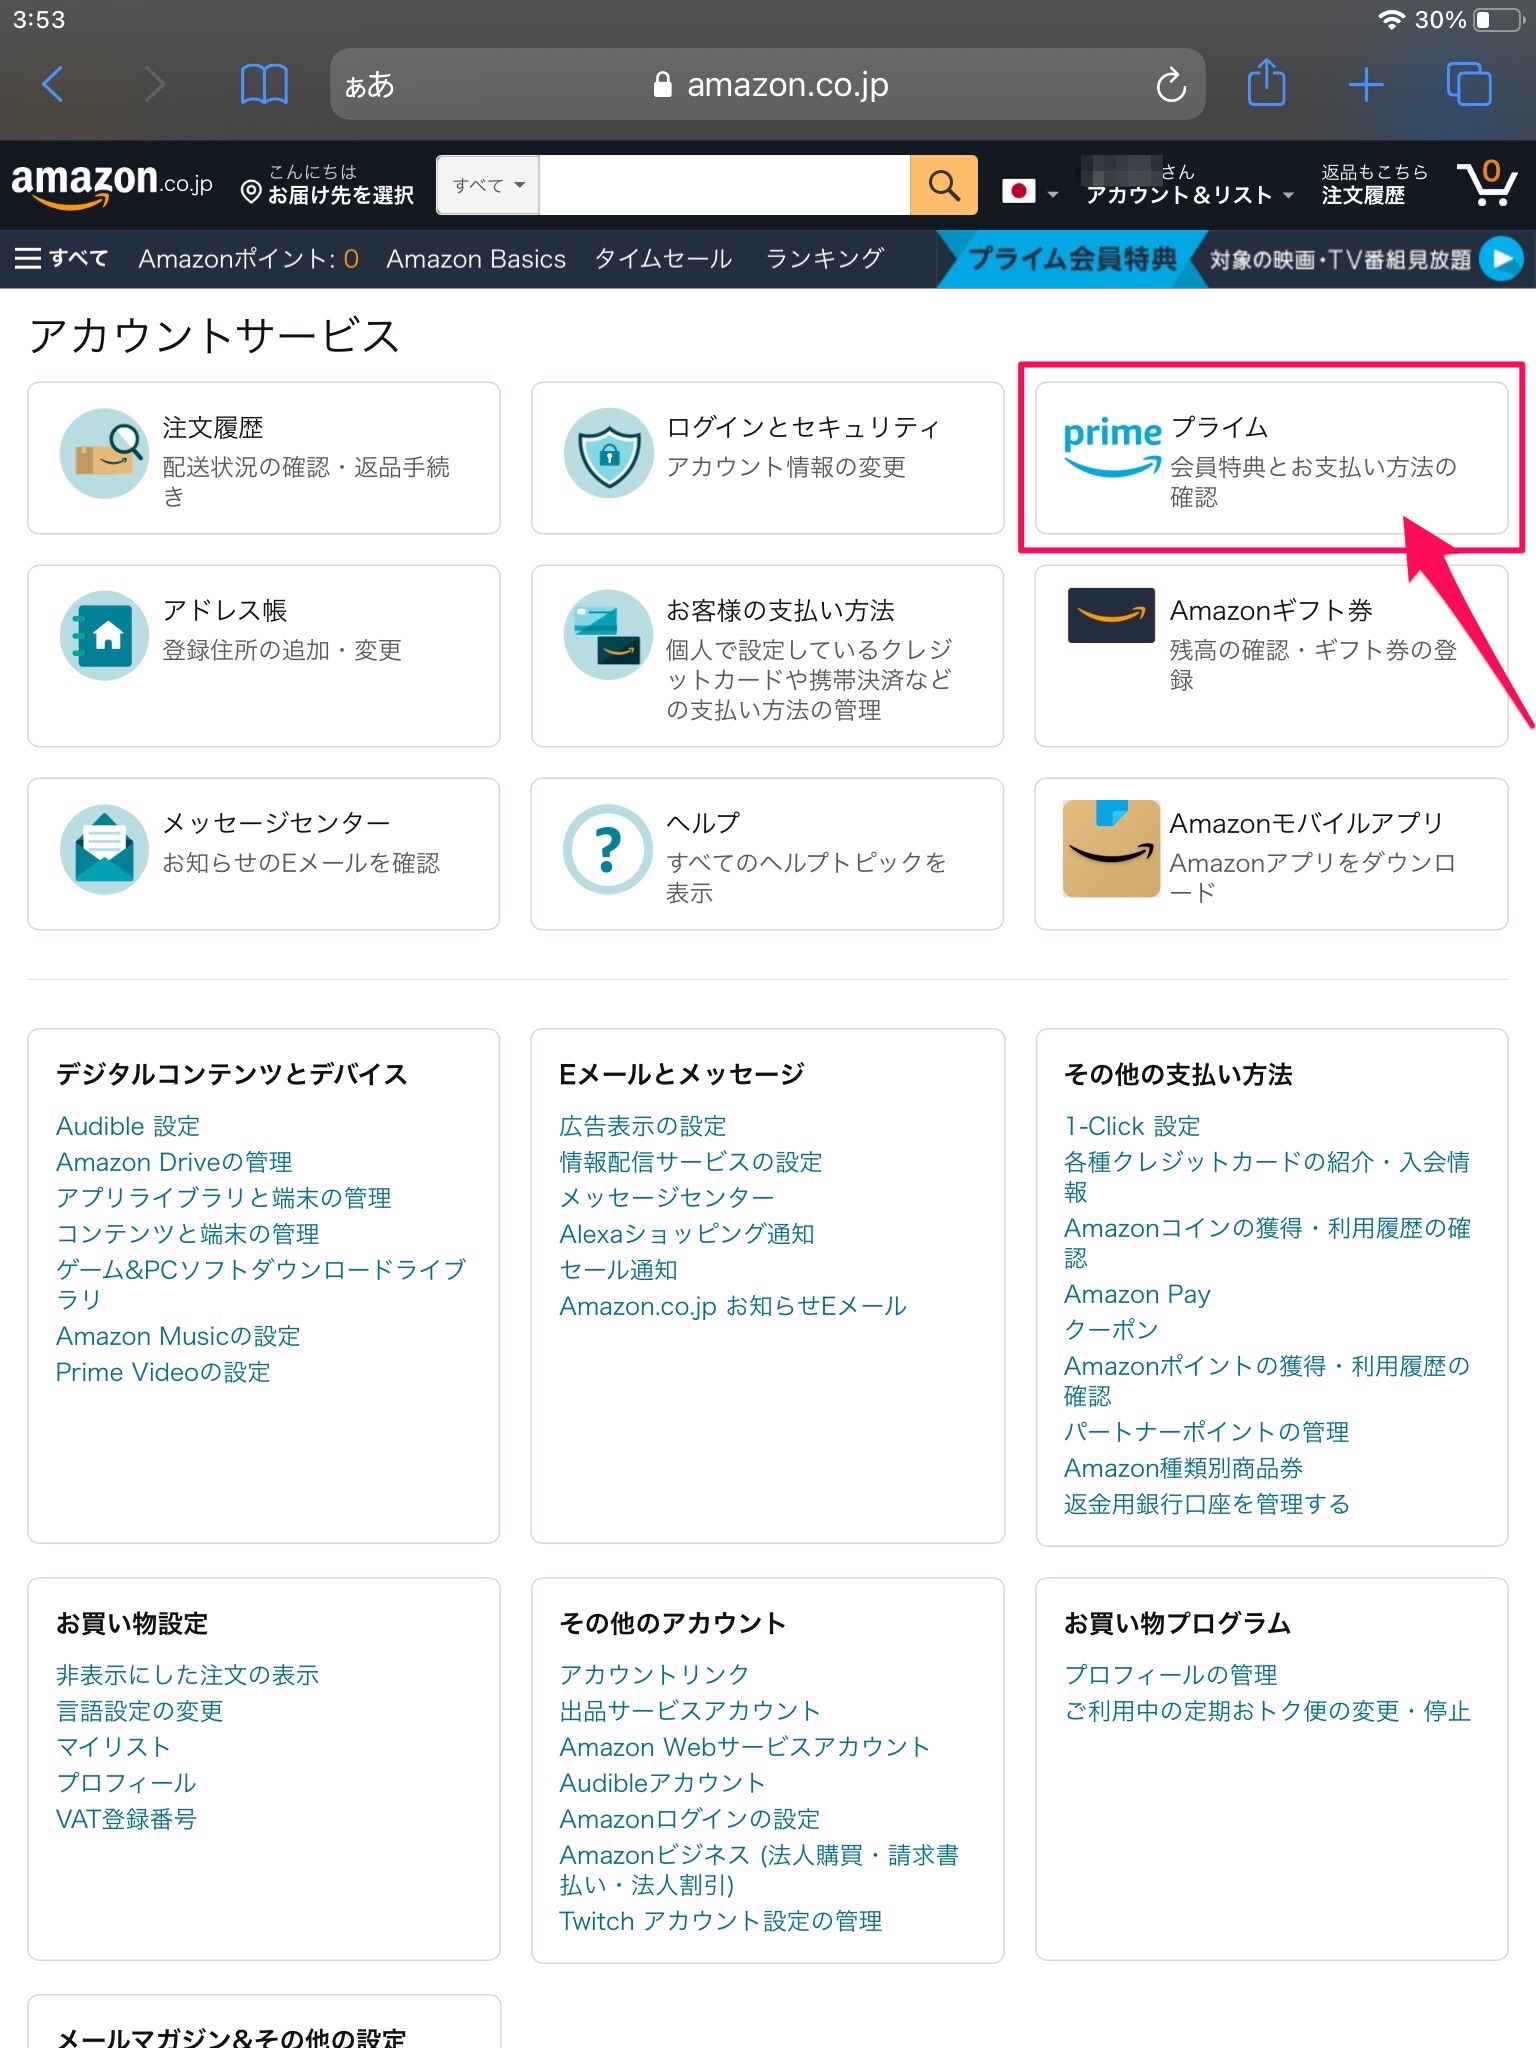 Amazon.co.jp　アカウントサービス 